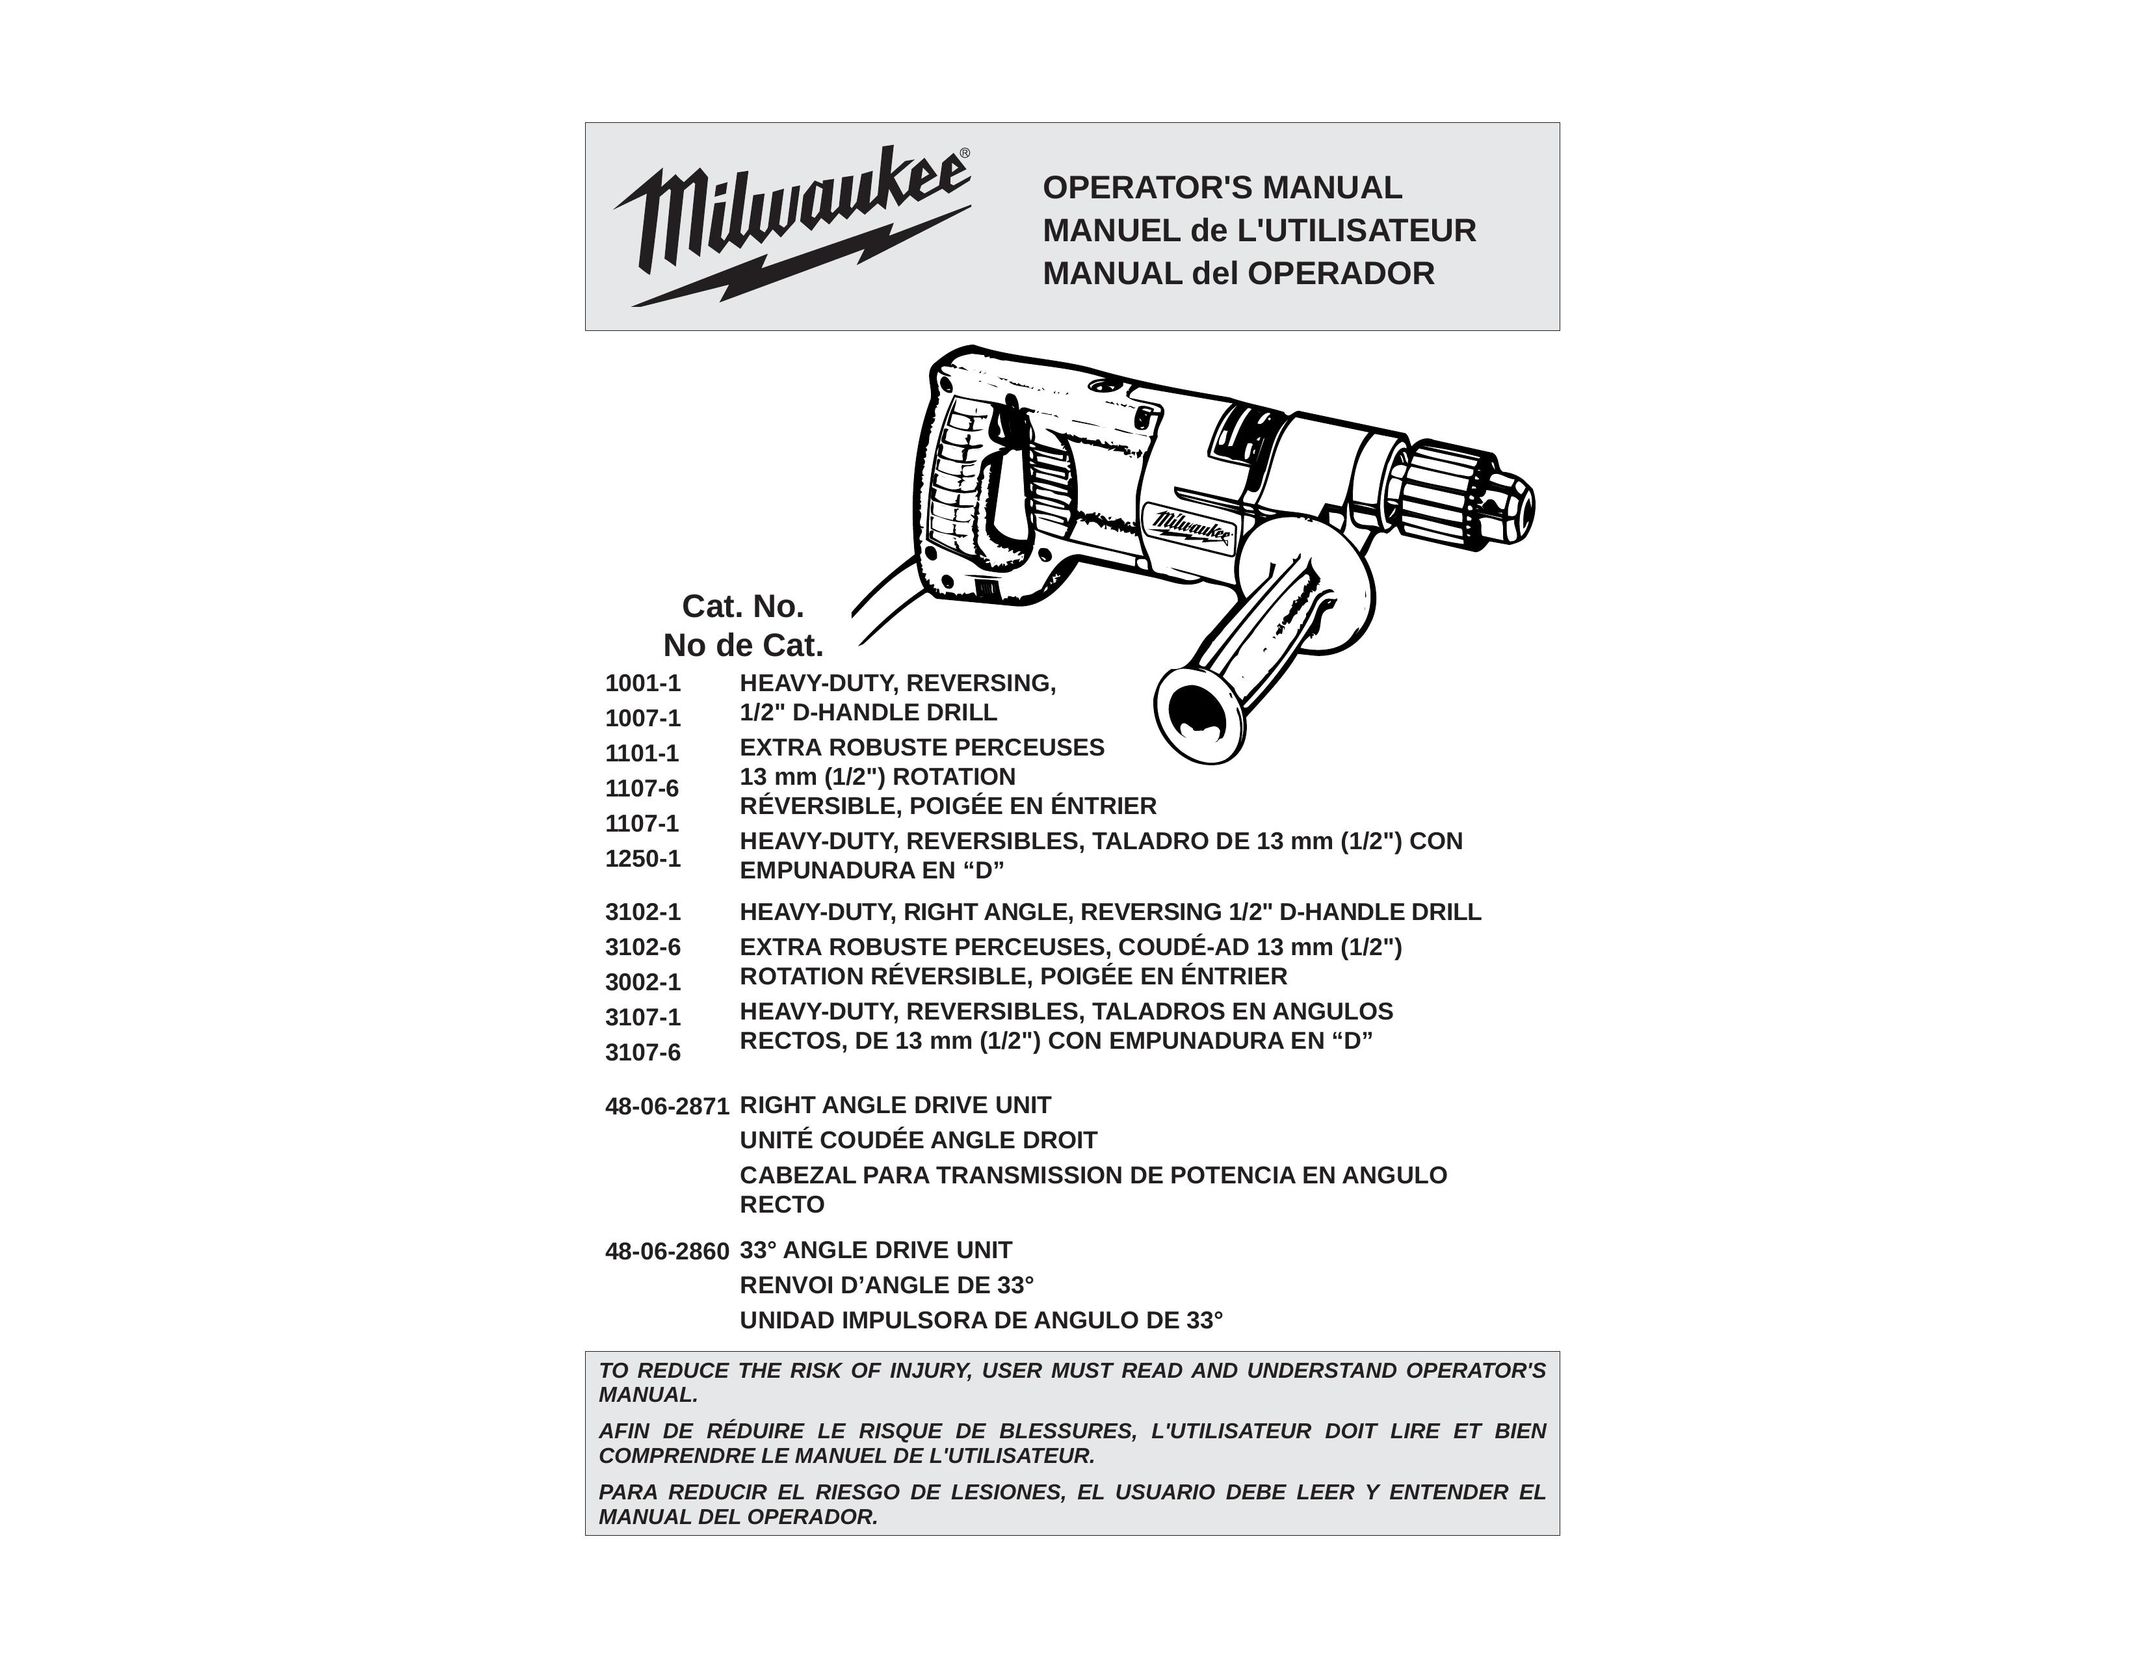 Milwaukee 1107-6 Drill User Manual